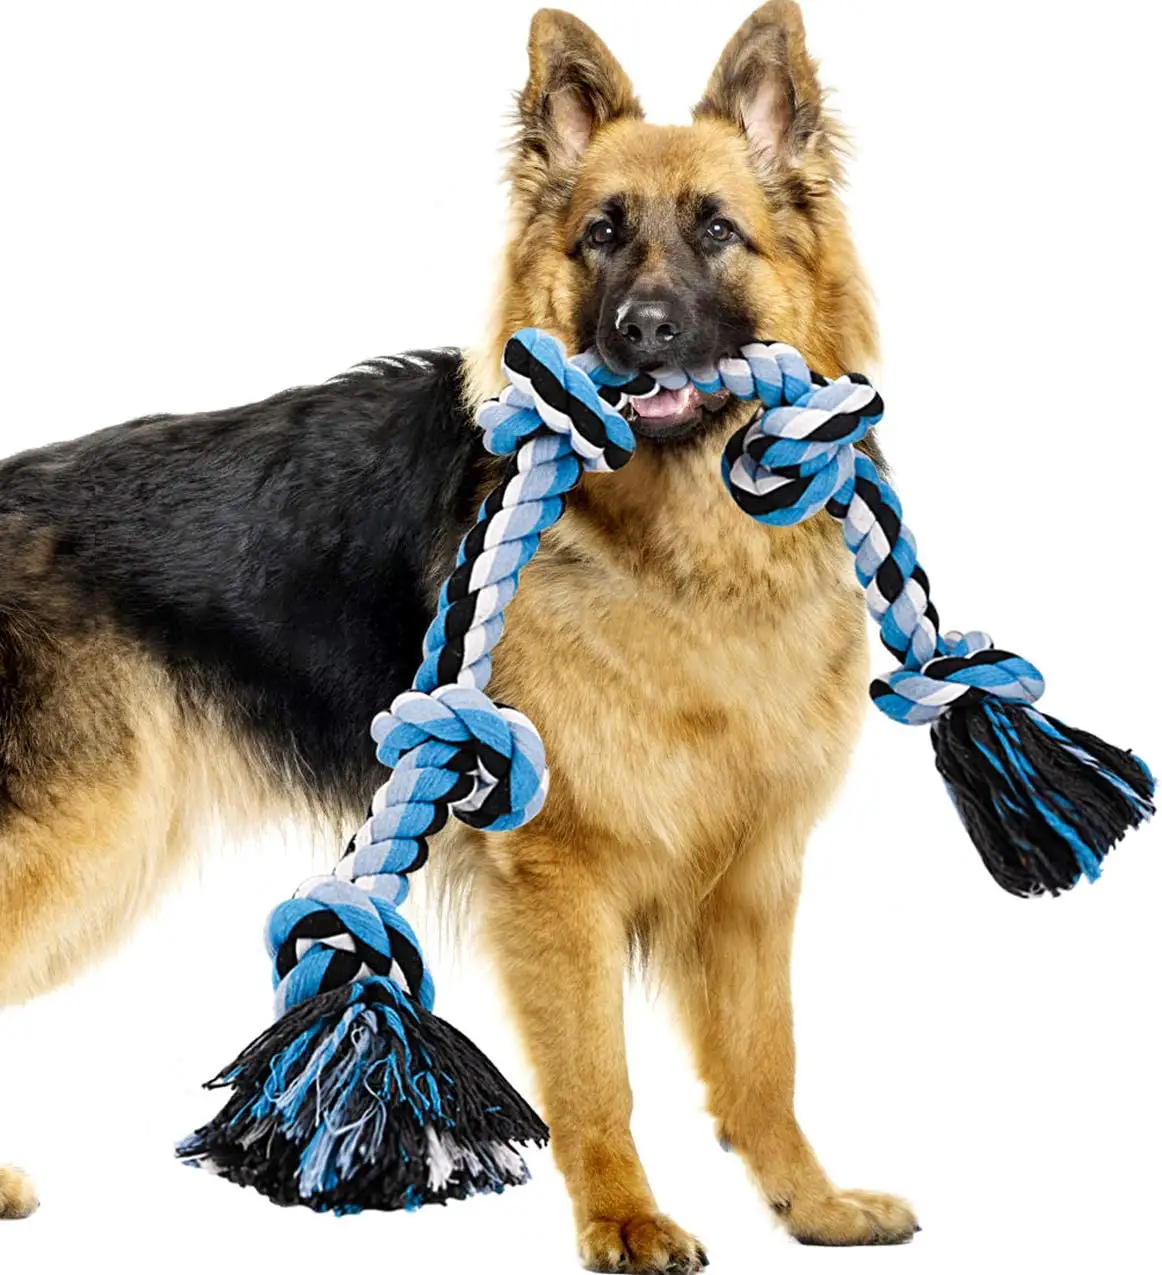 Chew Cotton Blend Pet Dog Rope Tug spielen Kau spielzeug Durable Big Dog Cotton Rope Toys großes Hundes pielzeug